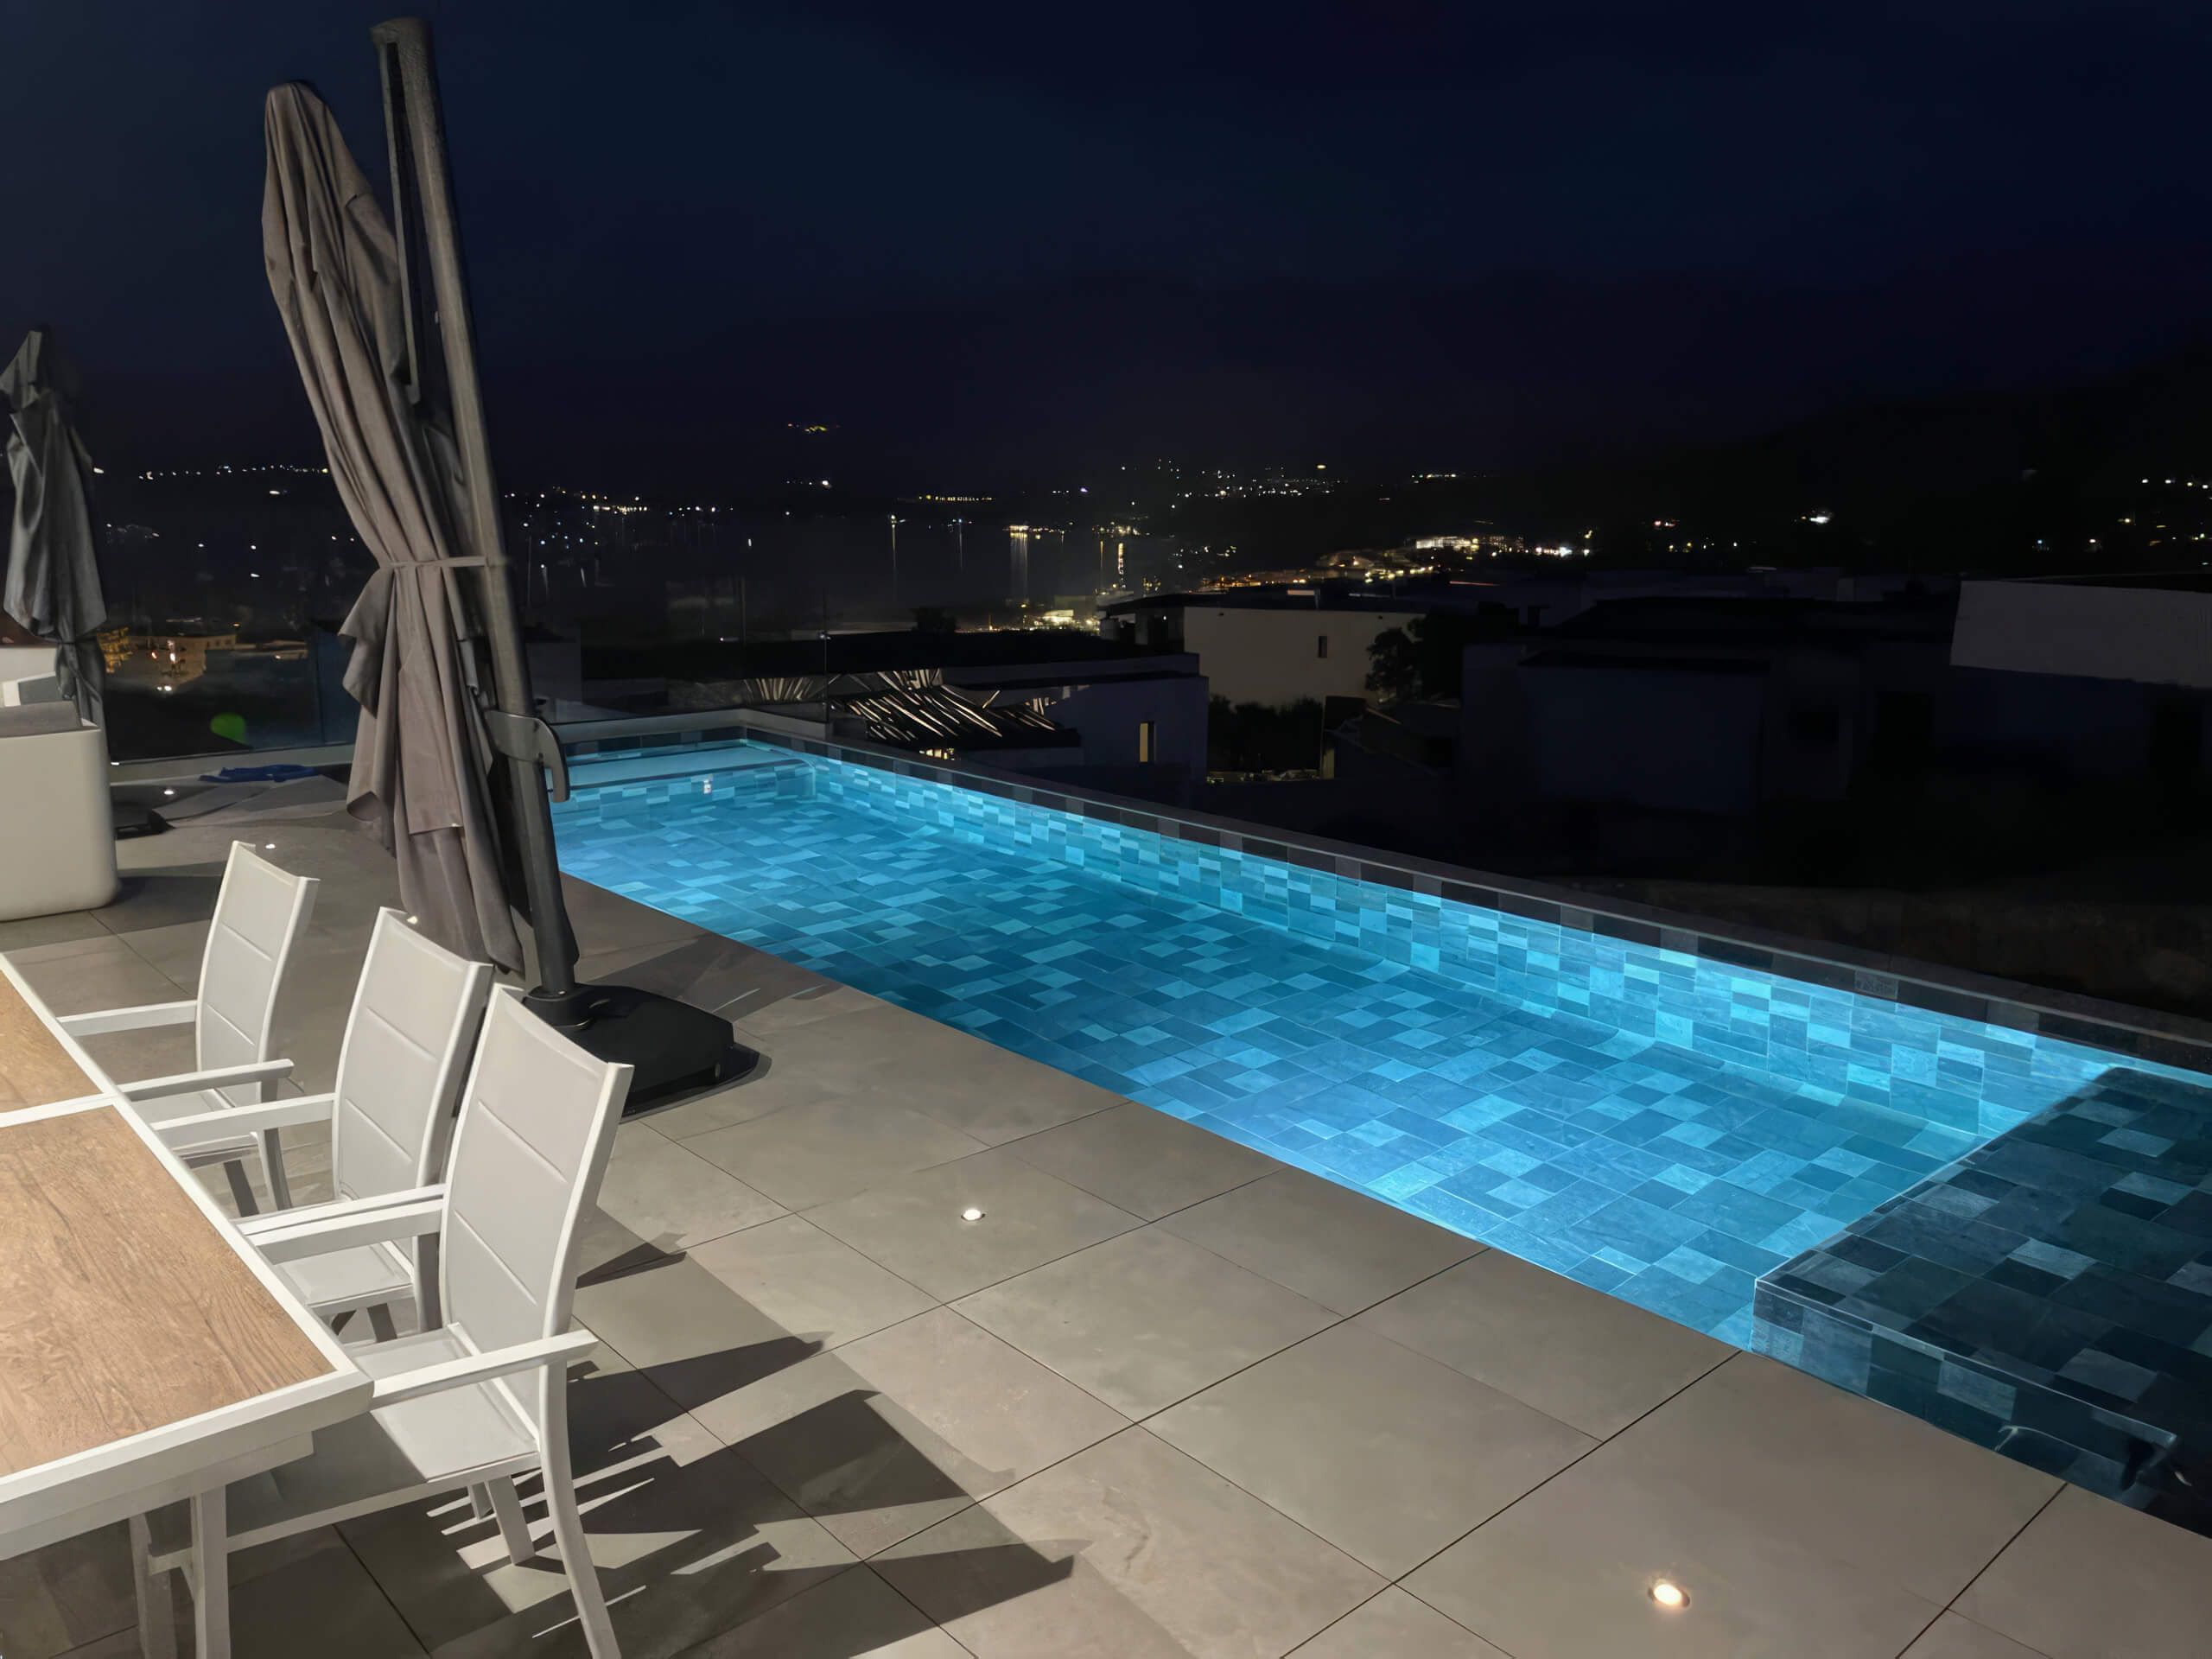 Villa Mare Monti - La piscine de nuit